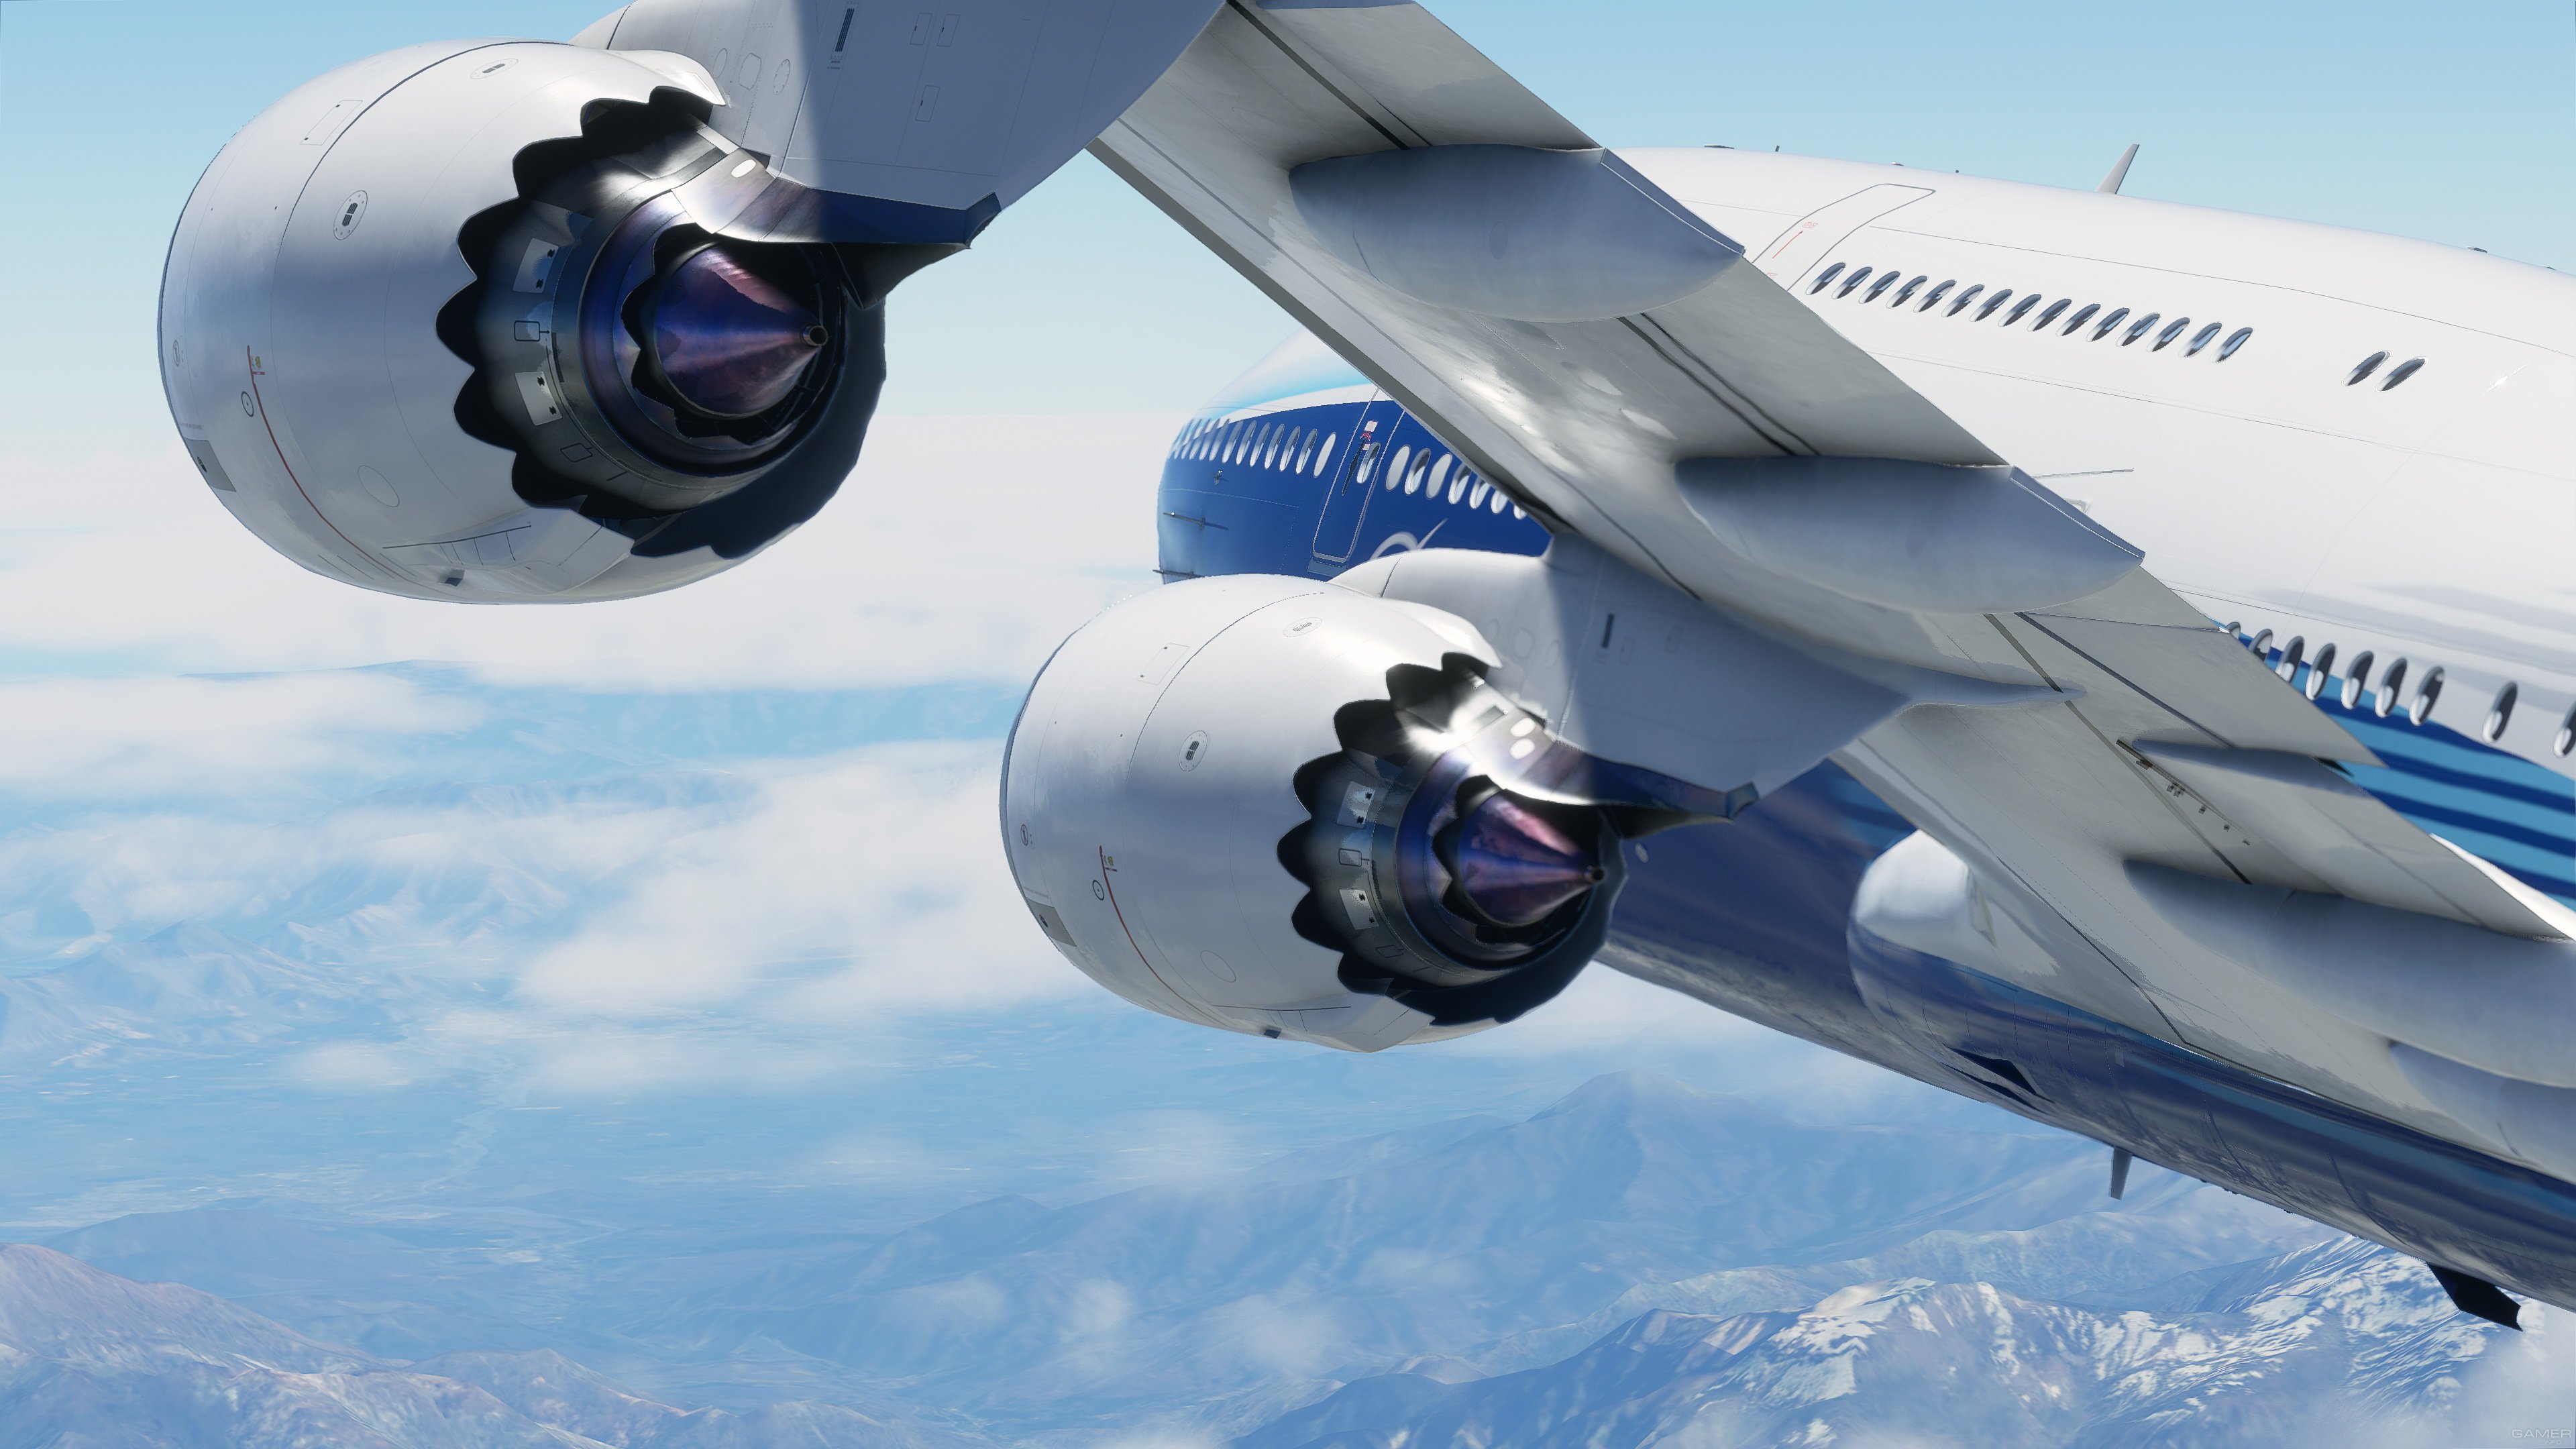 Microsoft Flight Simulator (2020 video game)